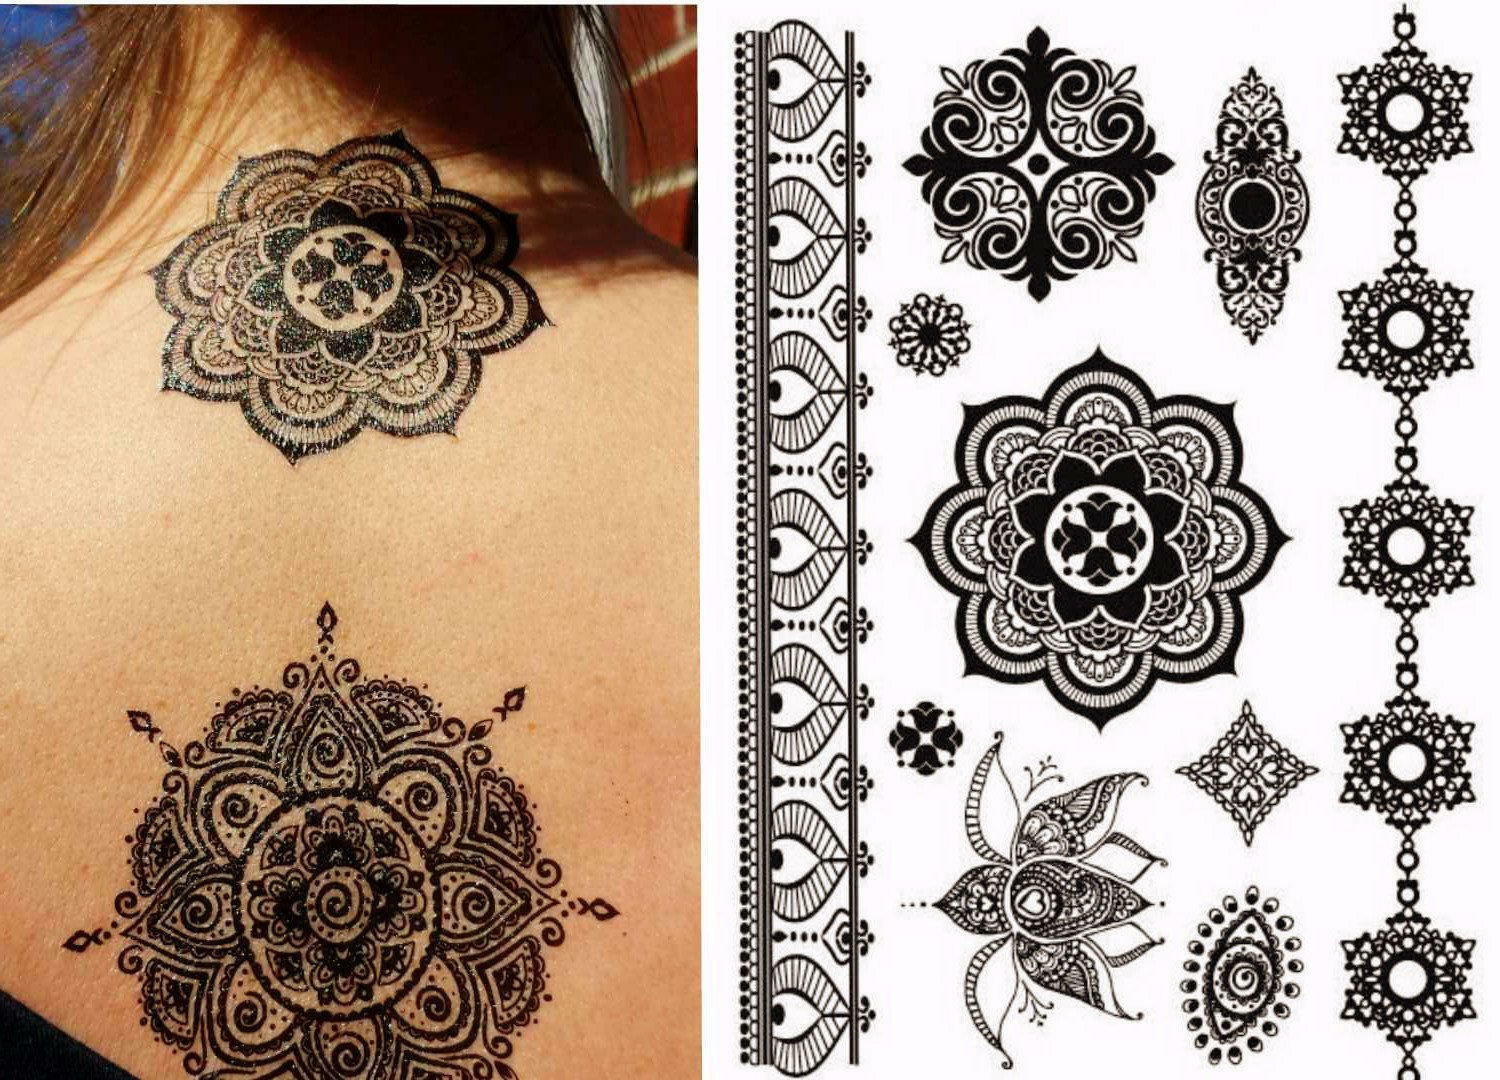 Mandala Tattoo - Lotus Flower Tattoo Henna inspired - Easy to Apply - Waterproof